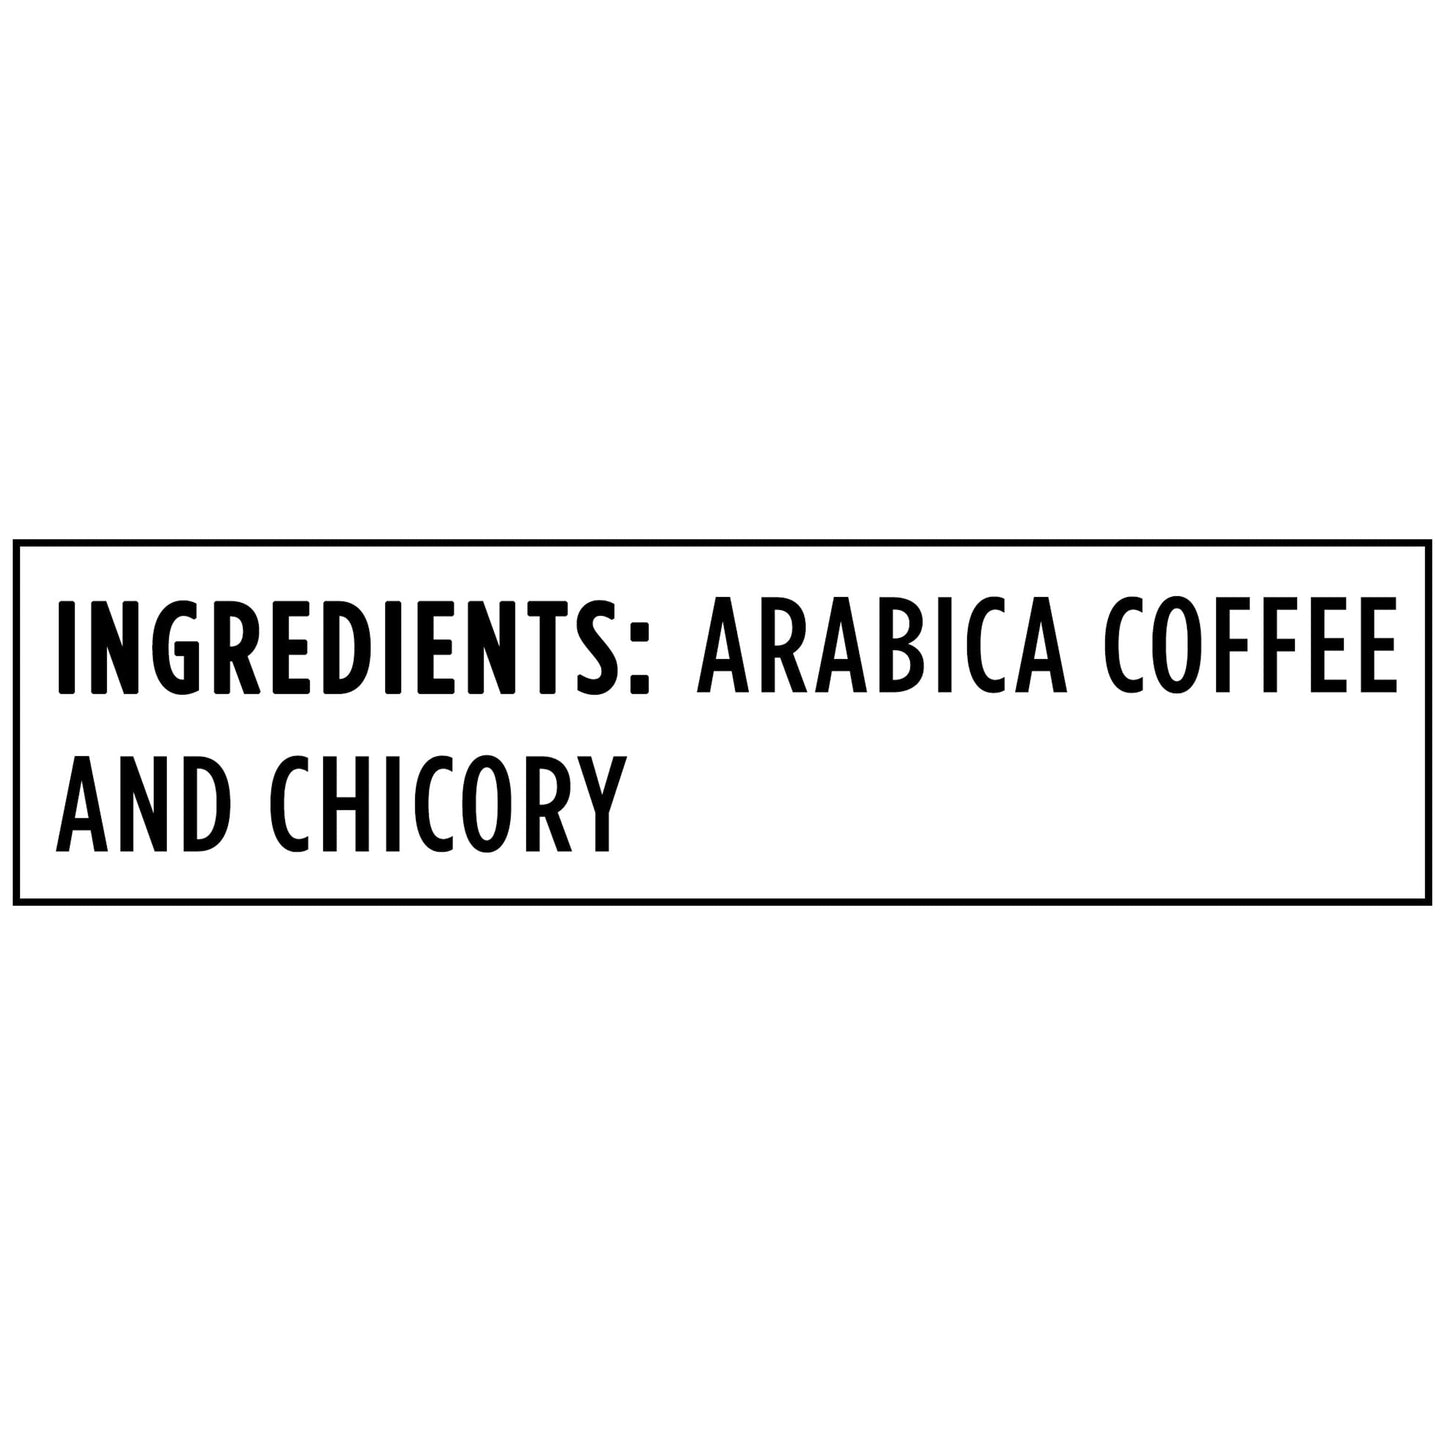 Community Coffee Coffee and Chicory 12 Ounce Bag